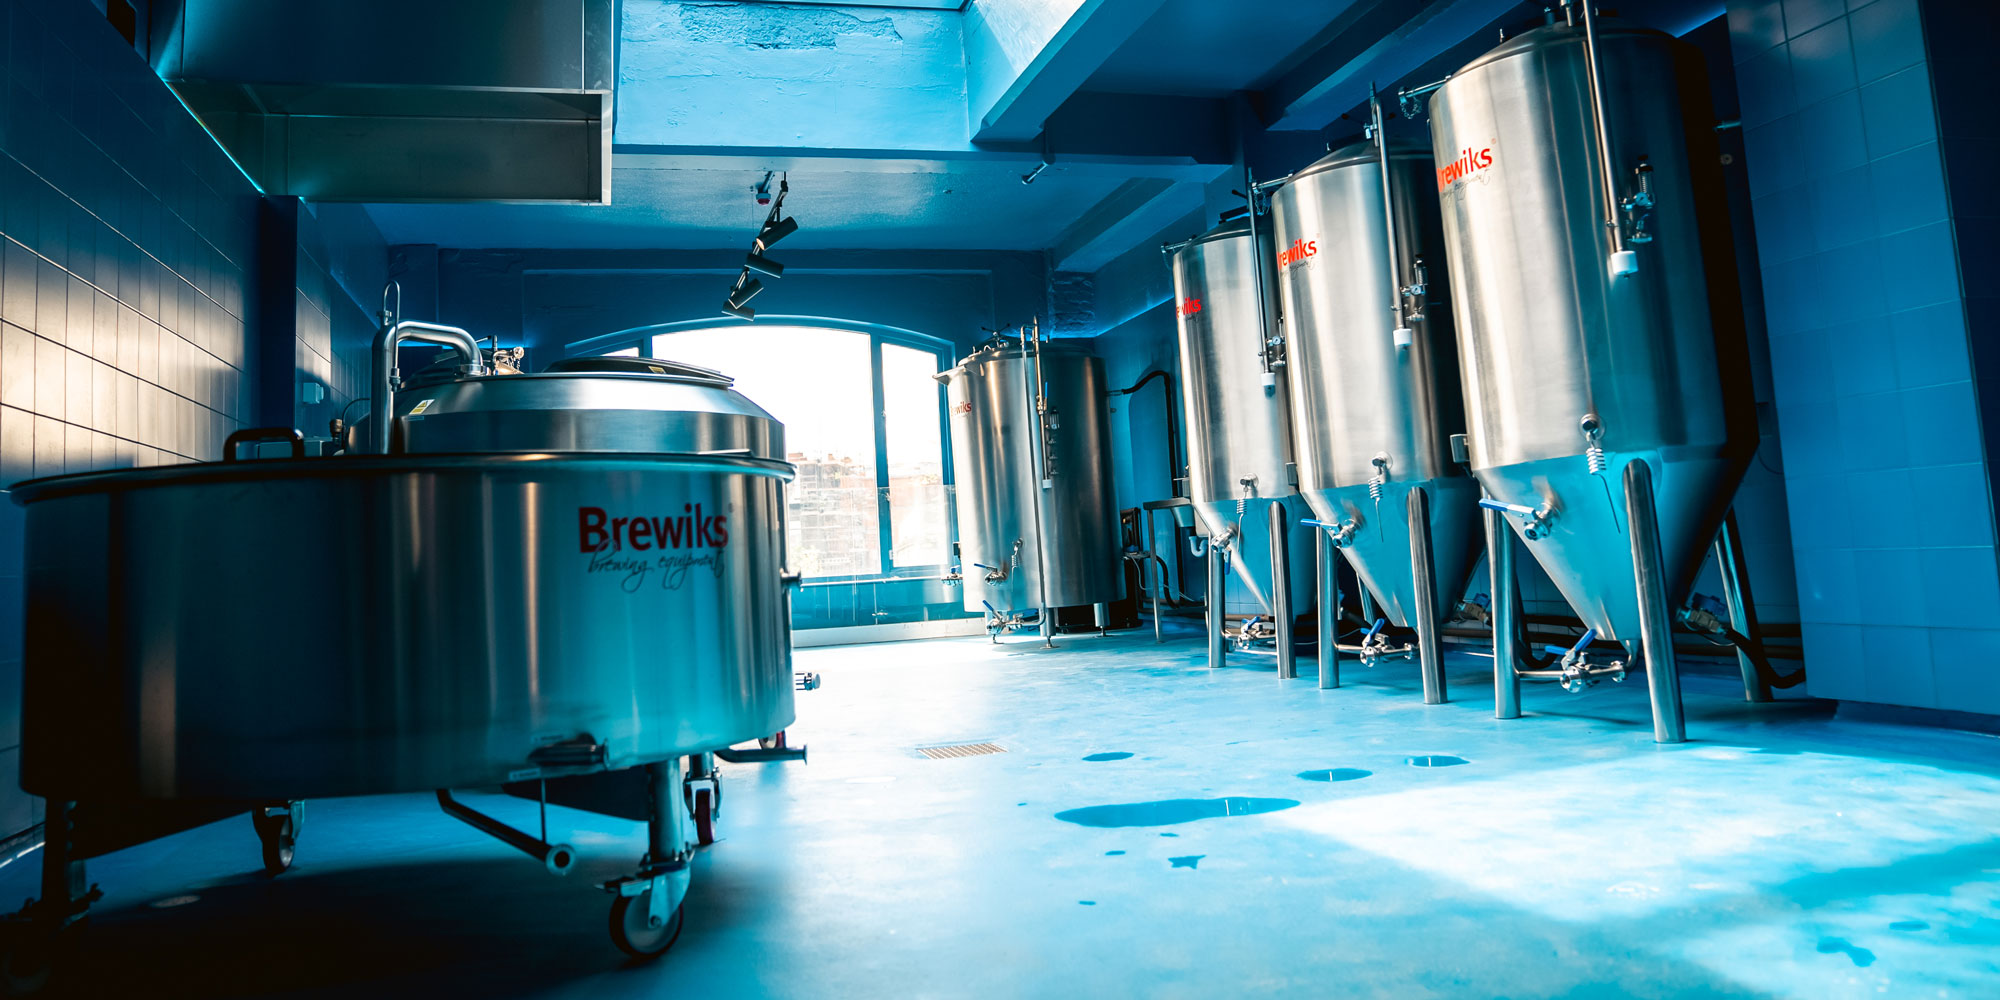 Brewiks brewing equipment